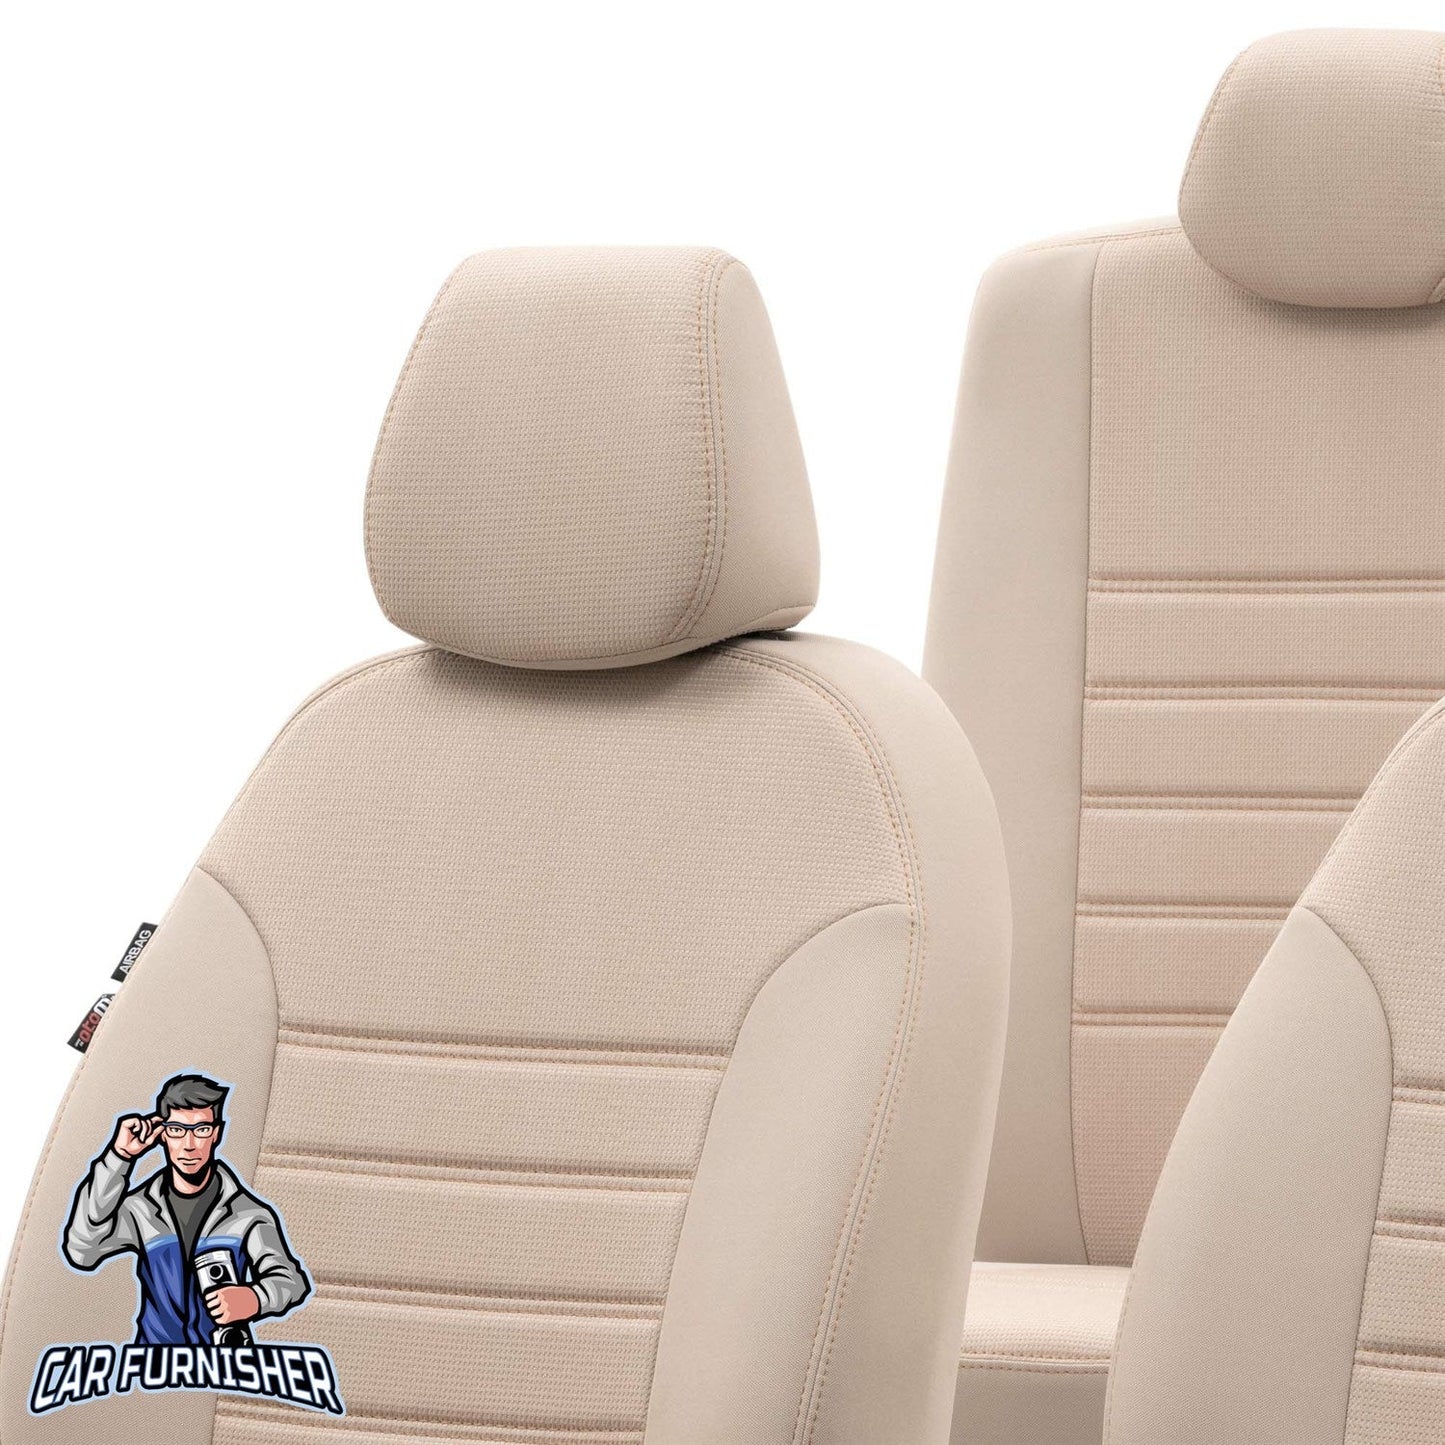 Toyota Proace City Seat Covers Original Jacquard Design Beige Jacquard Fabric